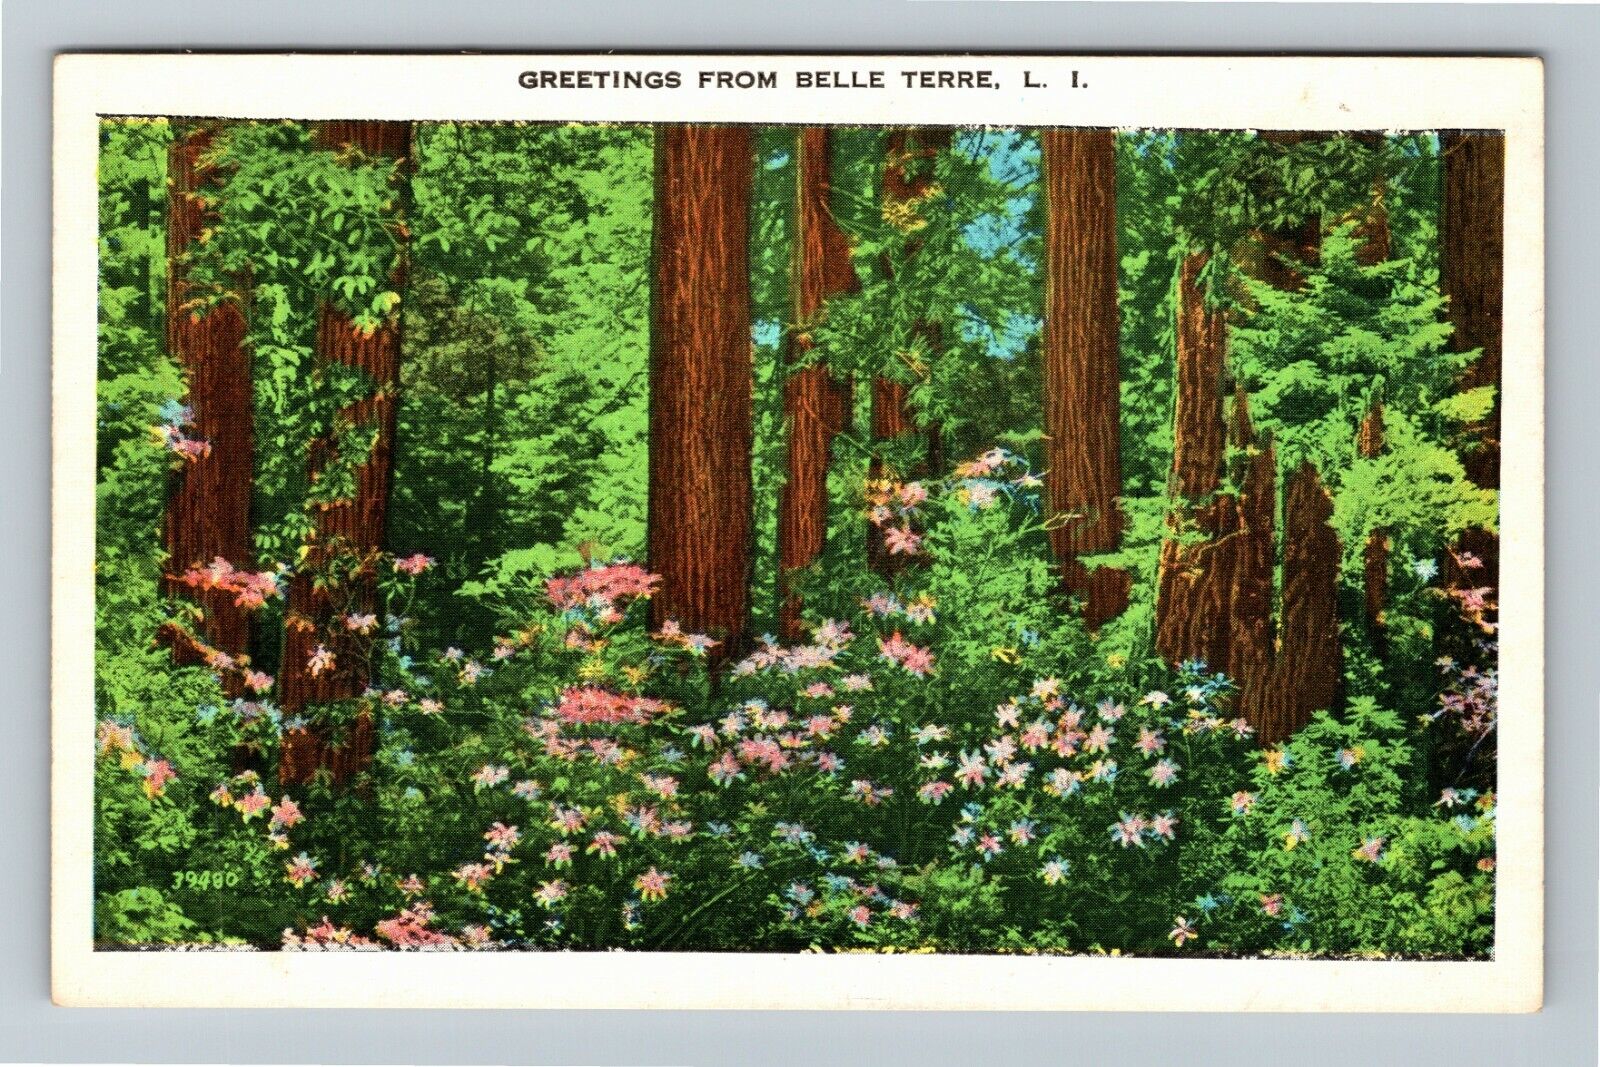 Belle Terre LI NY, Scenic Greetings, New York Vintage Postcard